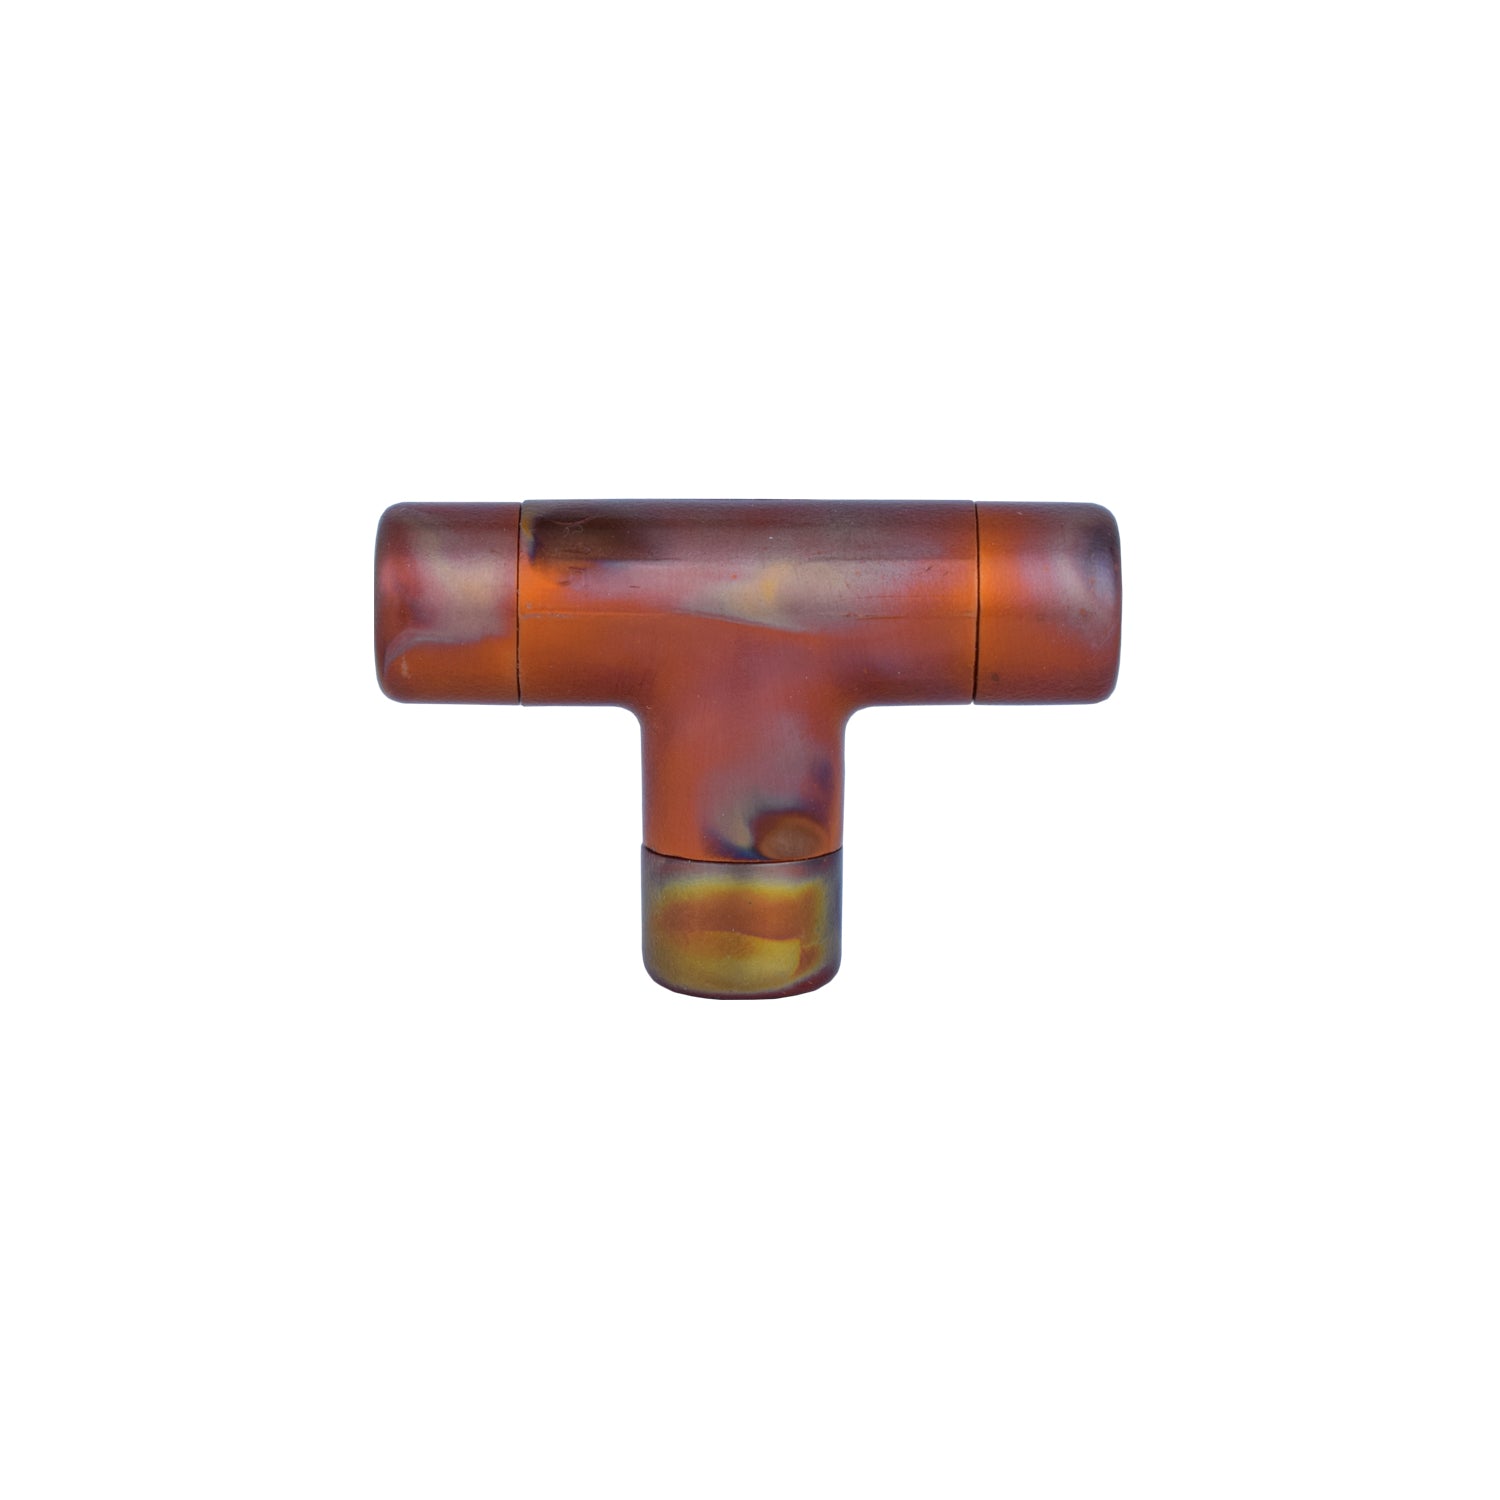 Copper Knob T-shaped Marbled - Proper Copper Design